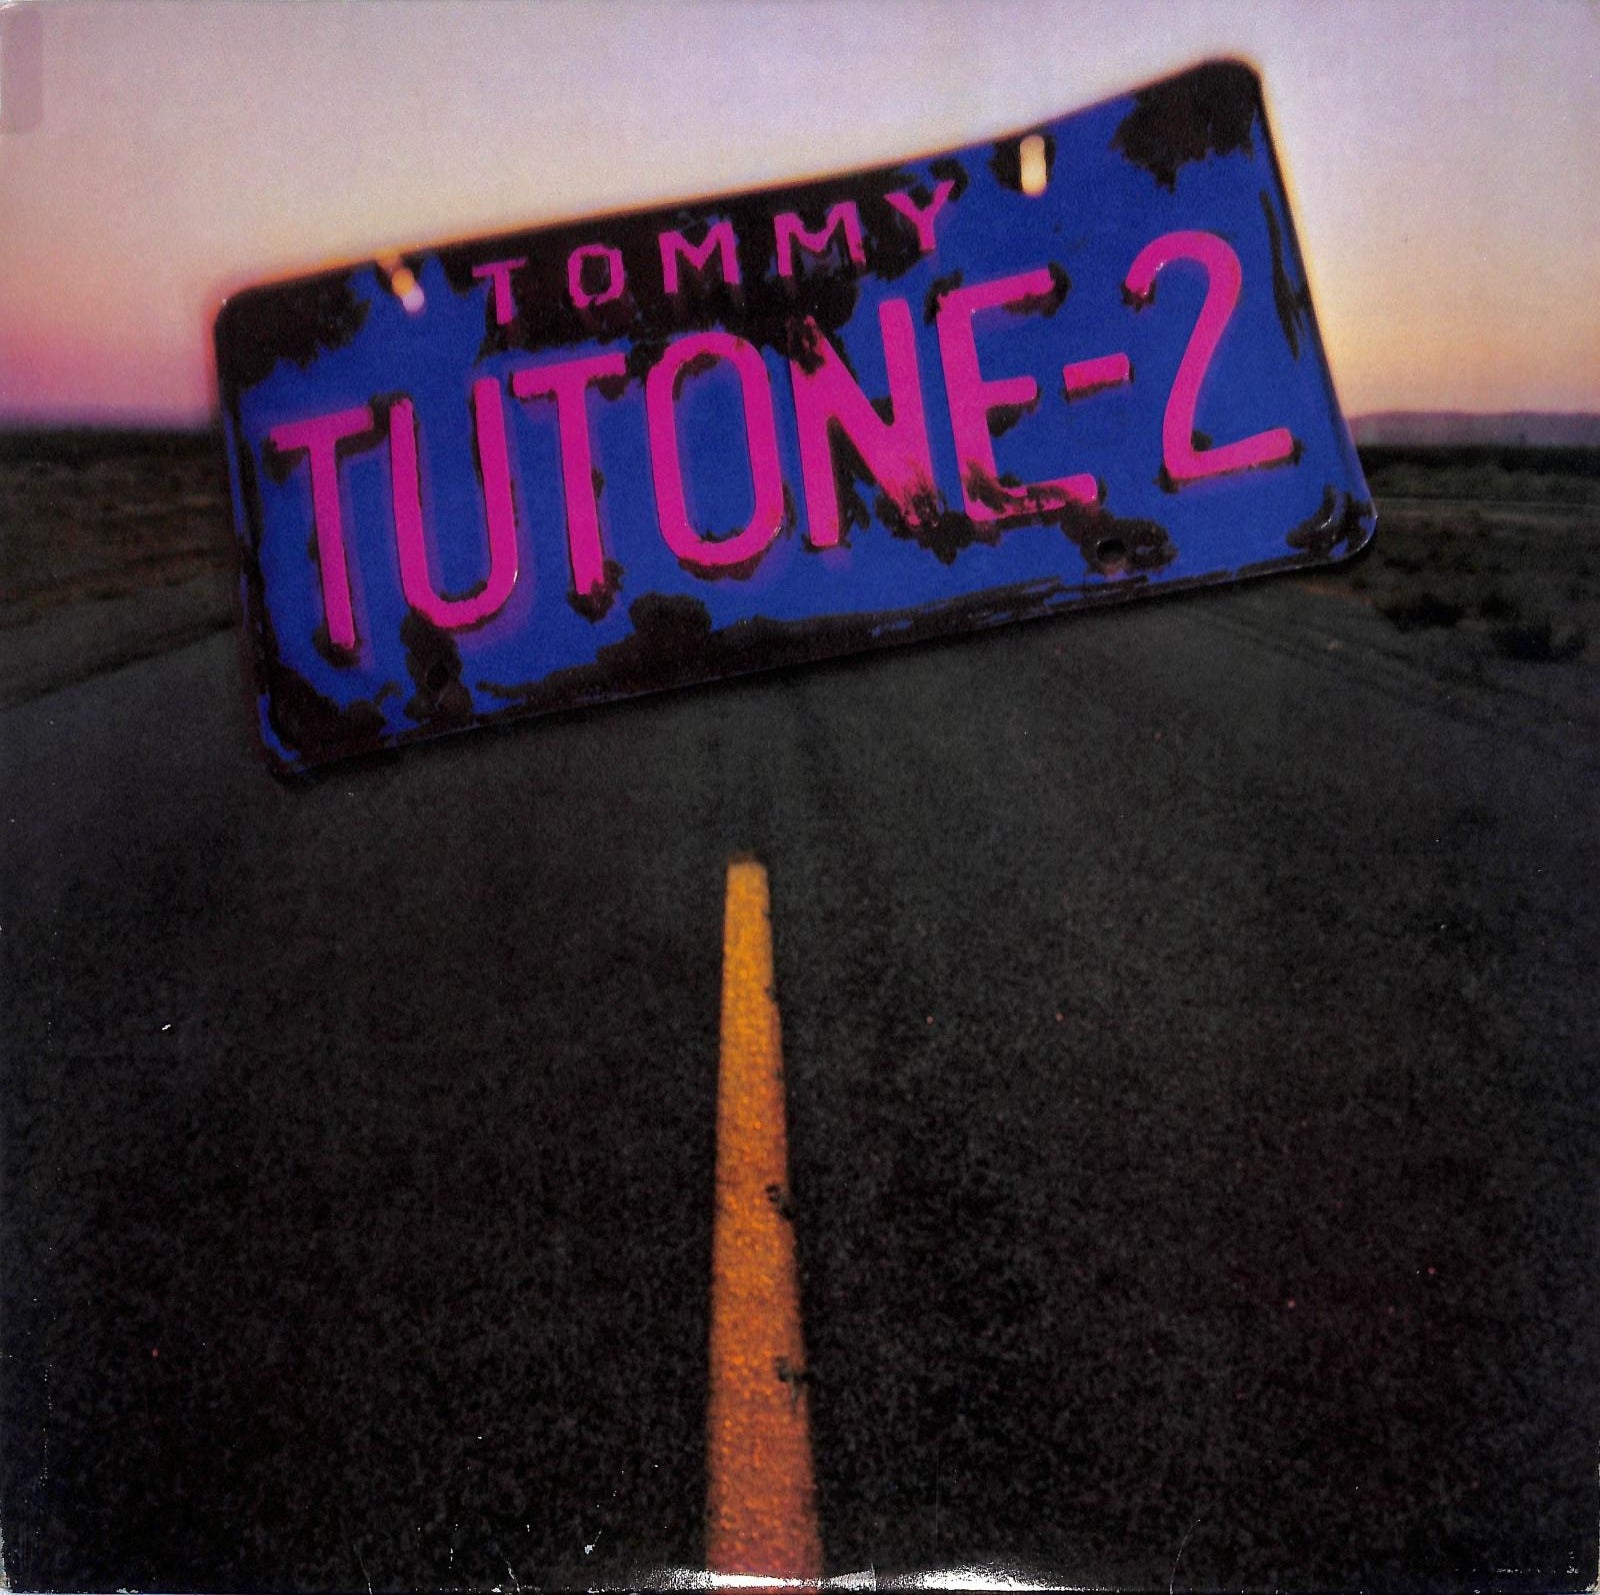 TOMMY TUTONE - Tommy Tutone-2